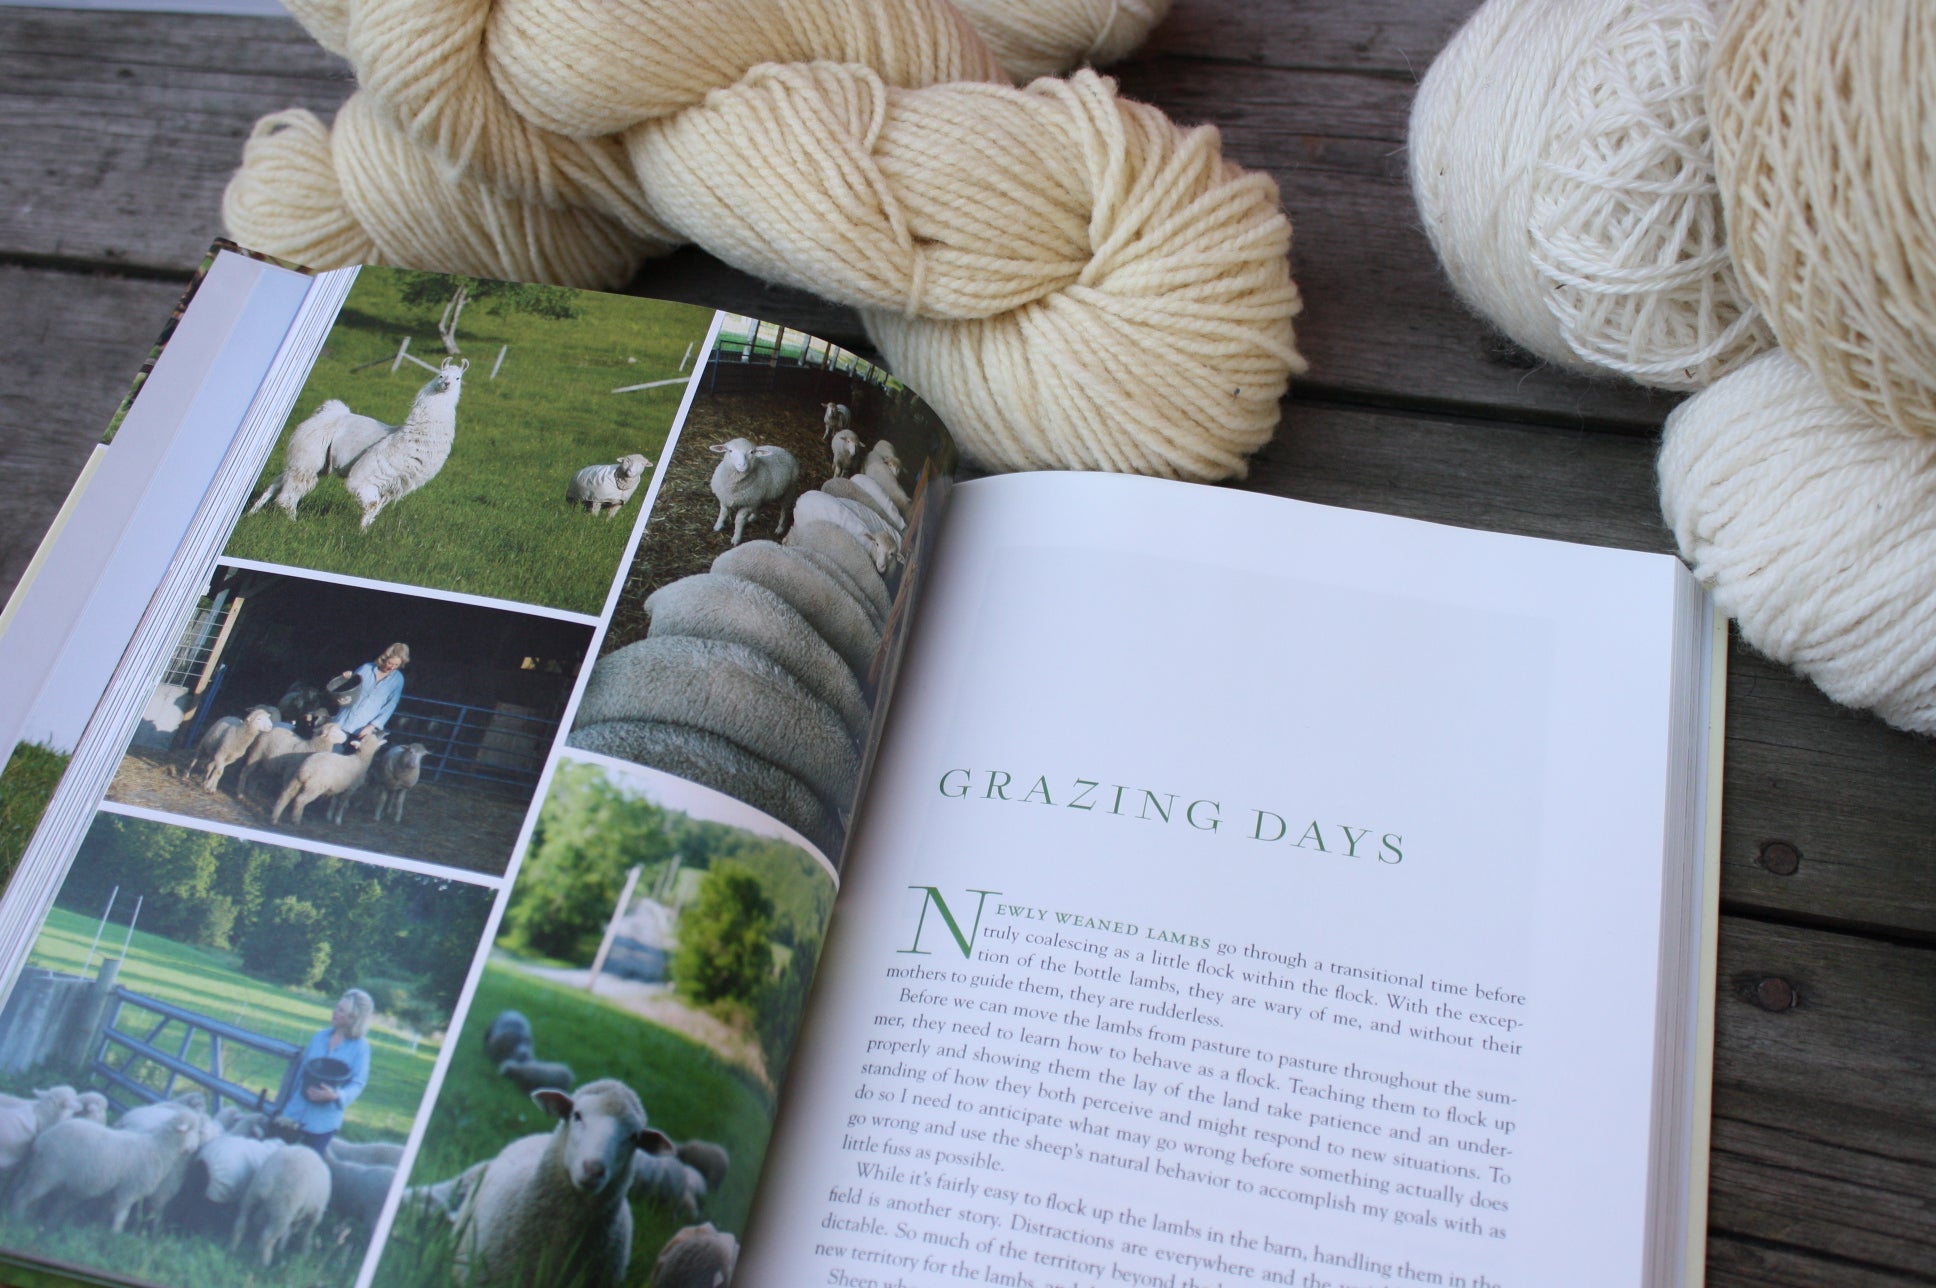 Adventures in Yarn Farming by Barbara Parry